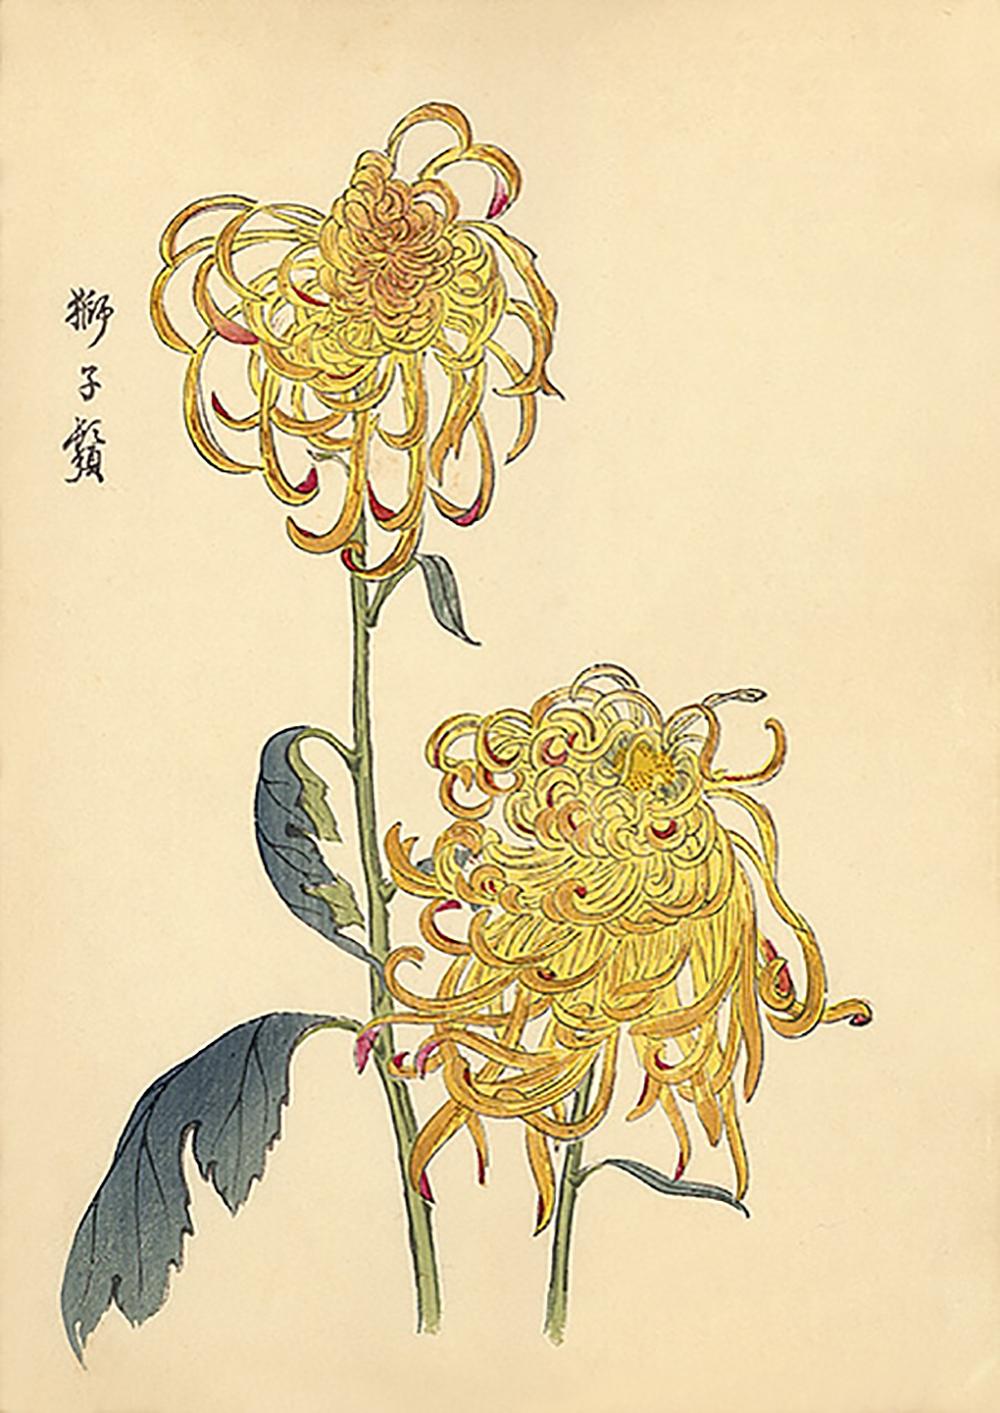 Unknown Still-Life Print - Chrysanthemum Woodblock Print - 1